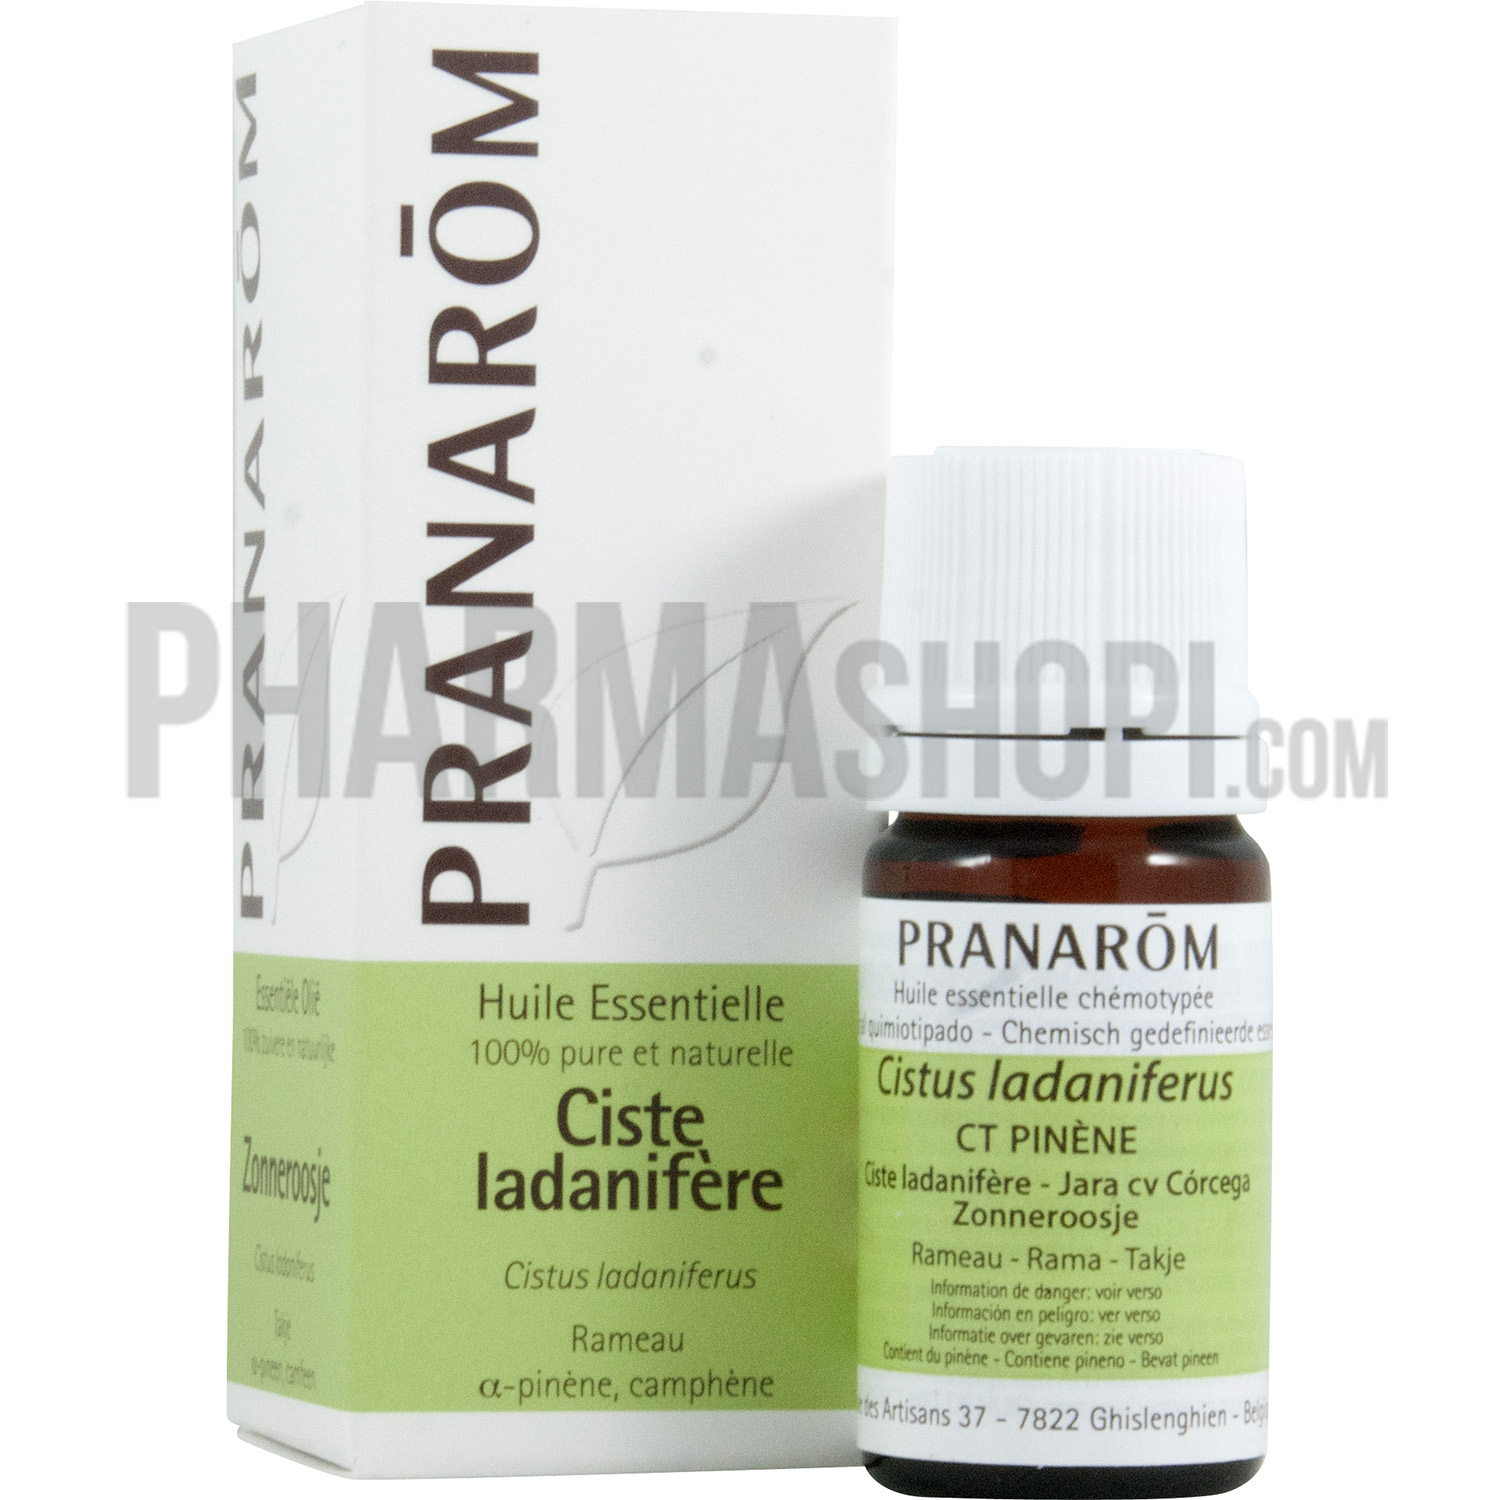 Huile essentielle de Ciste ladanifère Pranarôm - flacon de 5 ml